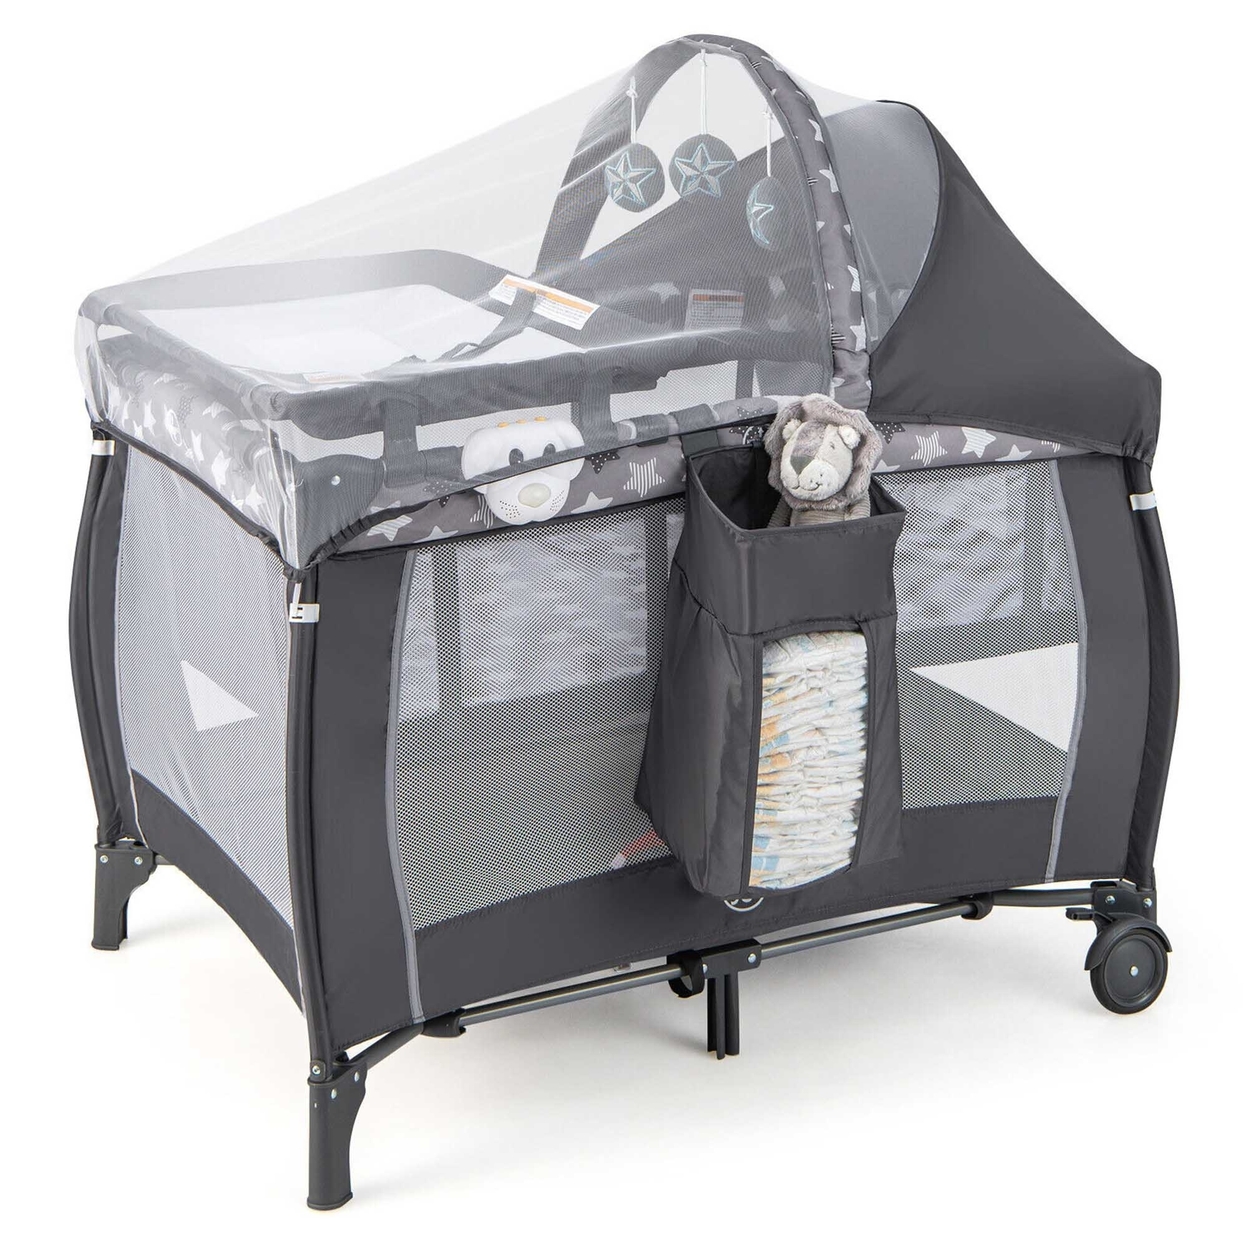 4-in-1 Portable Baby Playard Nursery Center Bassinet W/ Music Box Canopy & Net